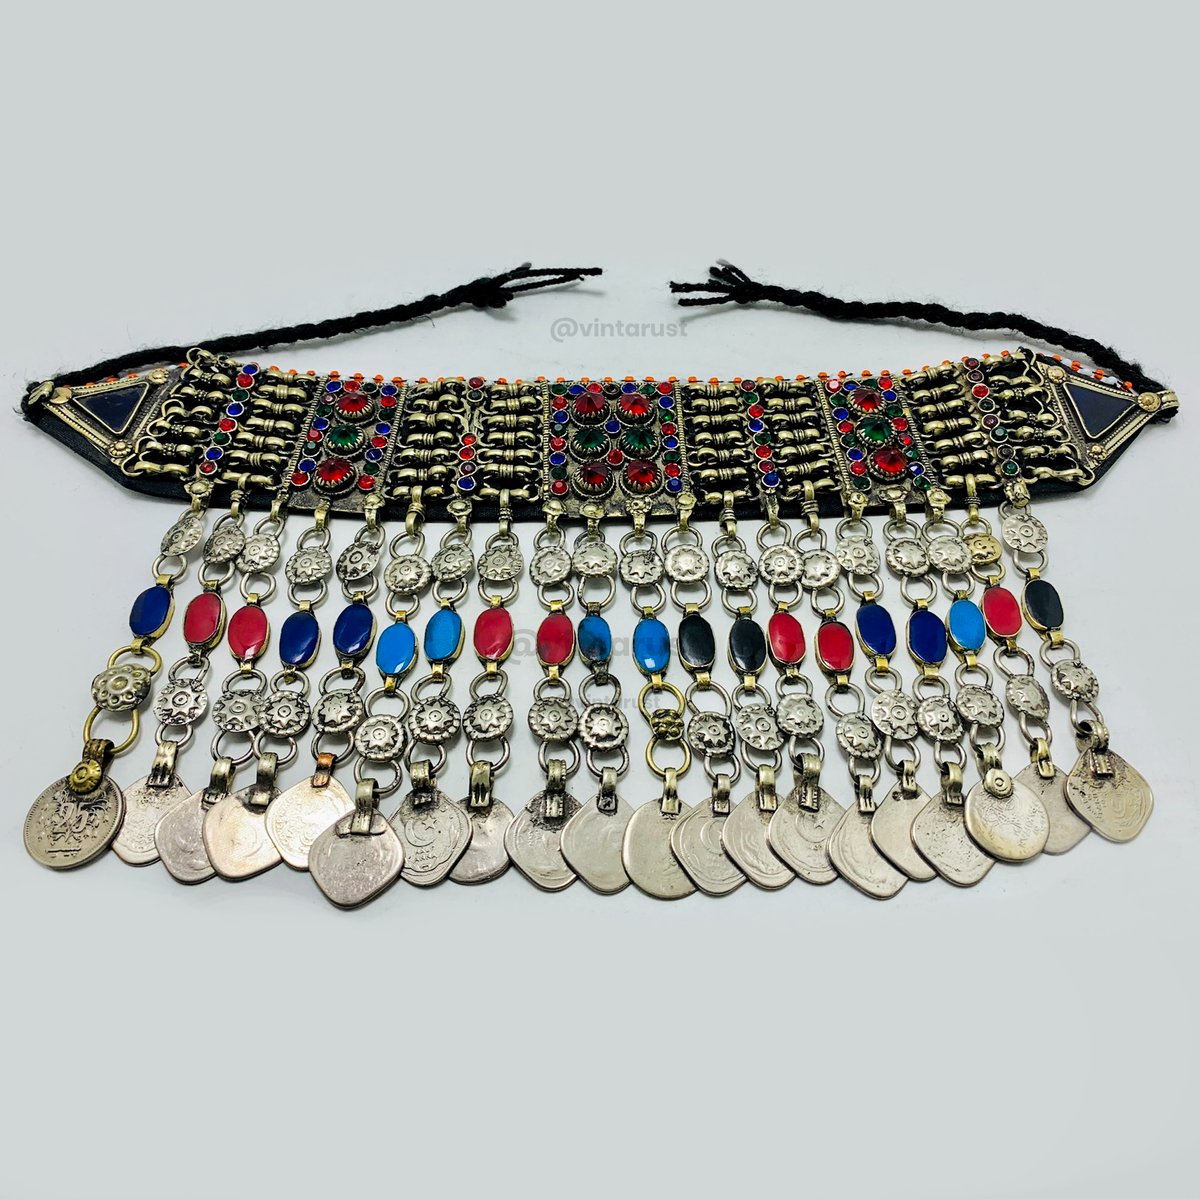 Multicolor Tribal Choker Necklace With Coins. 

Shop Now:
buff.ly/3pdLWZu

#chokerjewelry #tribalchoker #vintarust #ethnicjewelry #silverhuedbeauty #finetouches #shopsmall #ancestralcharm #bridalaccessory #versatilestyle #chokerlove #necklaceaddict #jewelryobsession